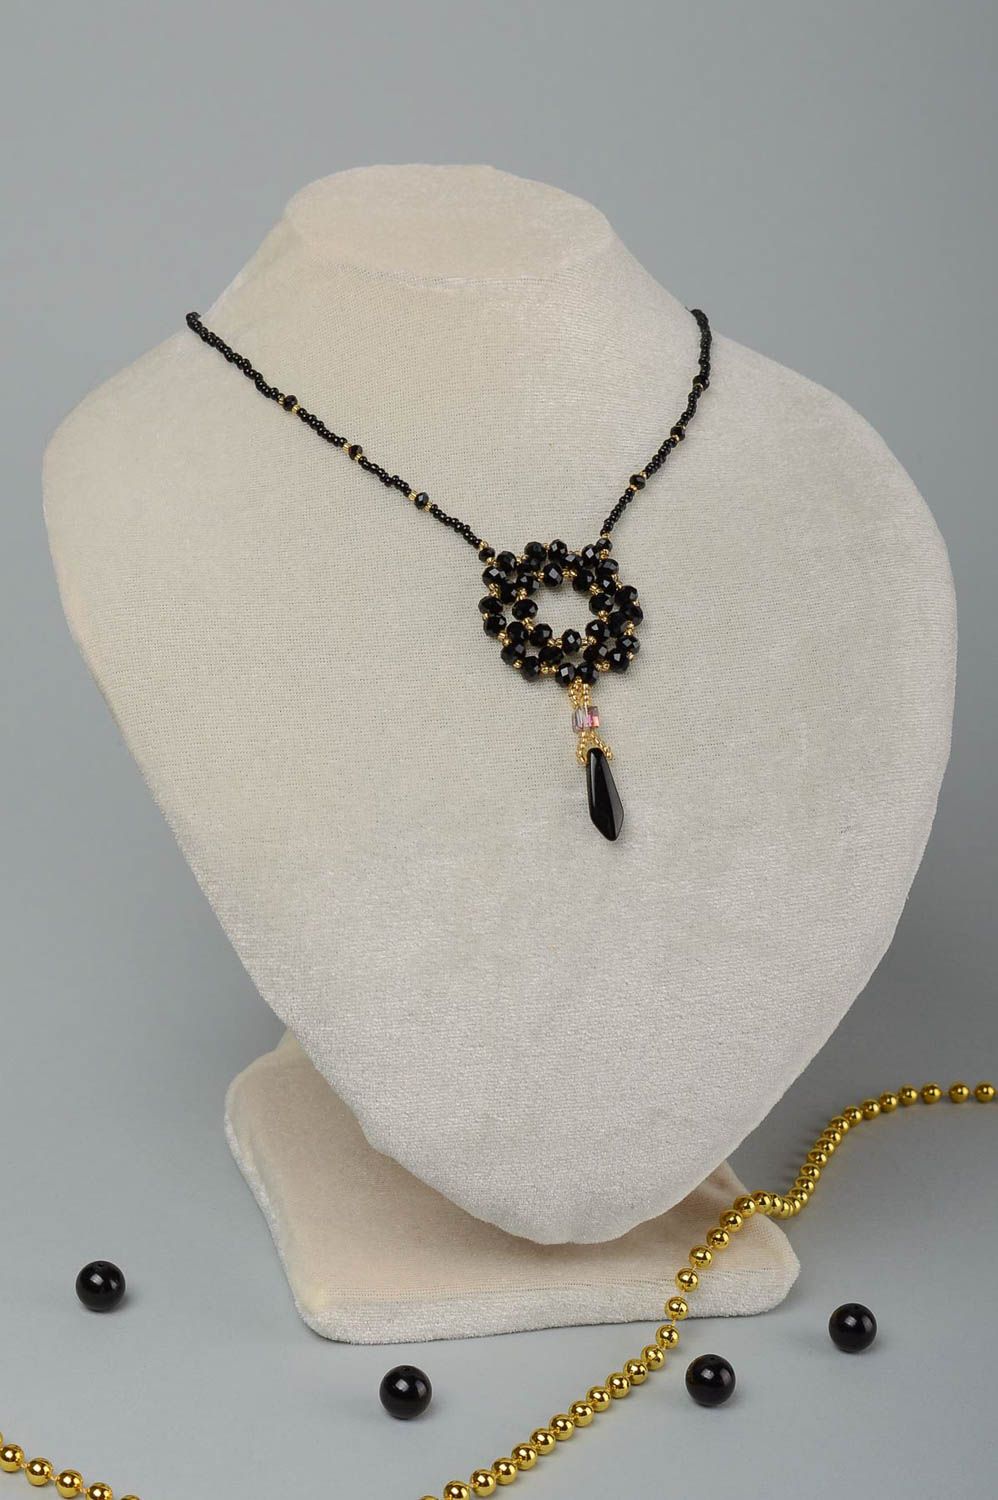 Handcraft necklace seed beads necklace designer accessories vintage bijouterie photo 1